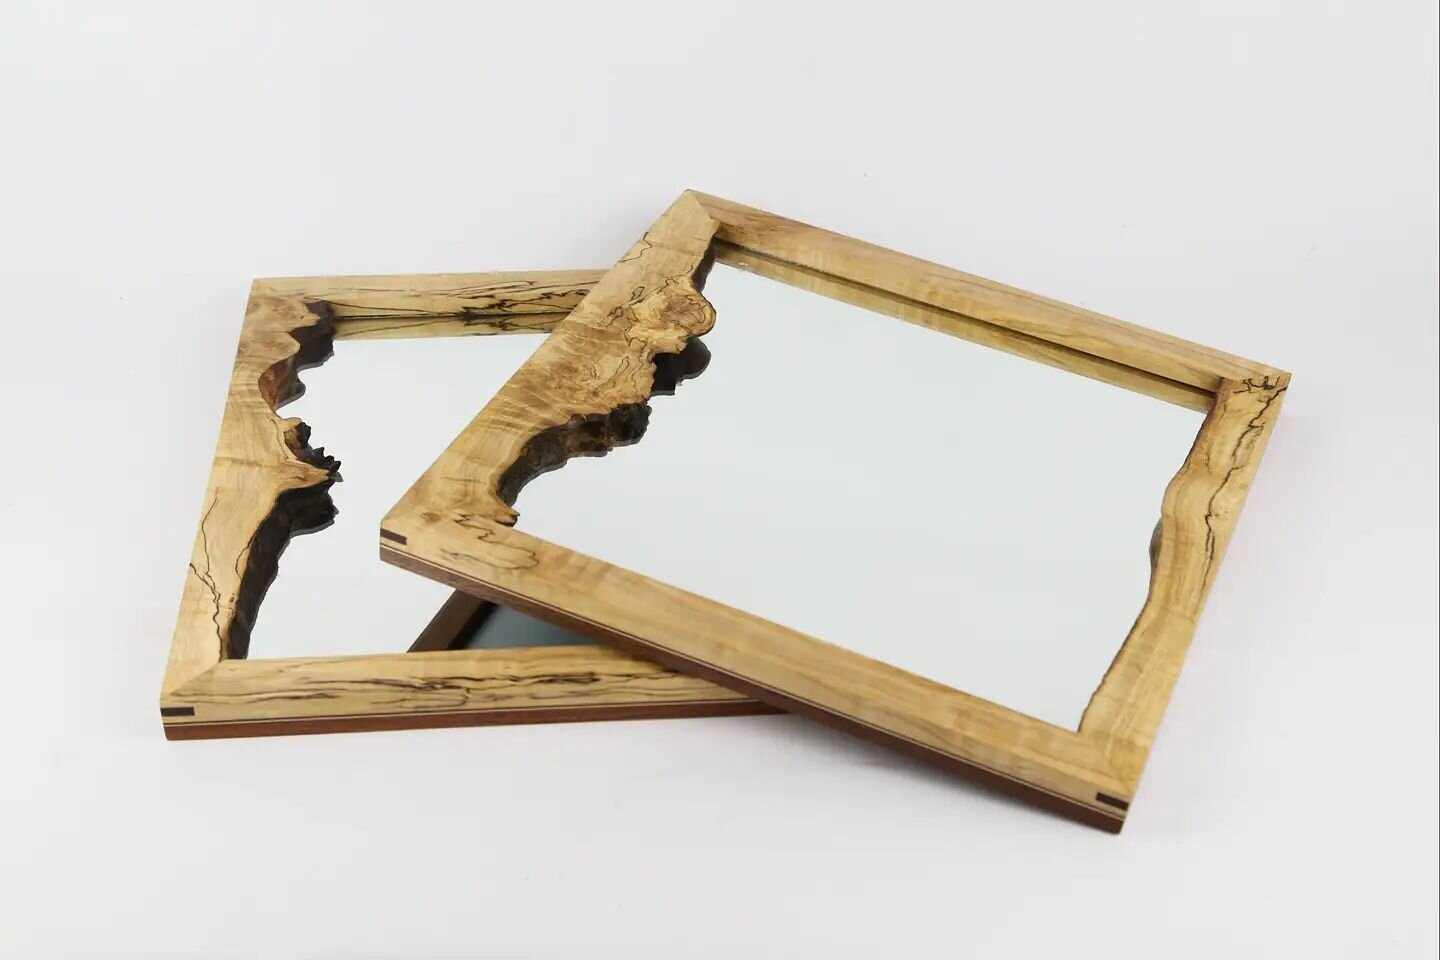 Some new live edge mirrors 🪞
...⁠
 #liveedge  #slab  #walnut  #handcrafted  #wnetrza  #woodwork  #luxury  #liveedgefurniture  #art  #epoxytable  #rivertable  #drewnowdomu  #drewno  #love  #decor  #customfurniture  #custom  #liveedgetable  #liveedgew